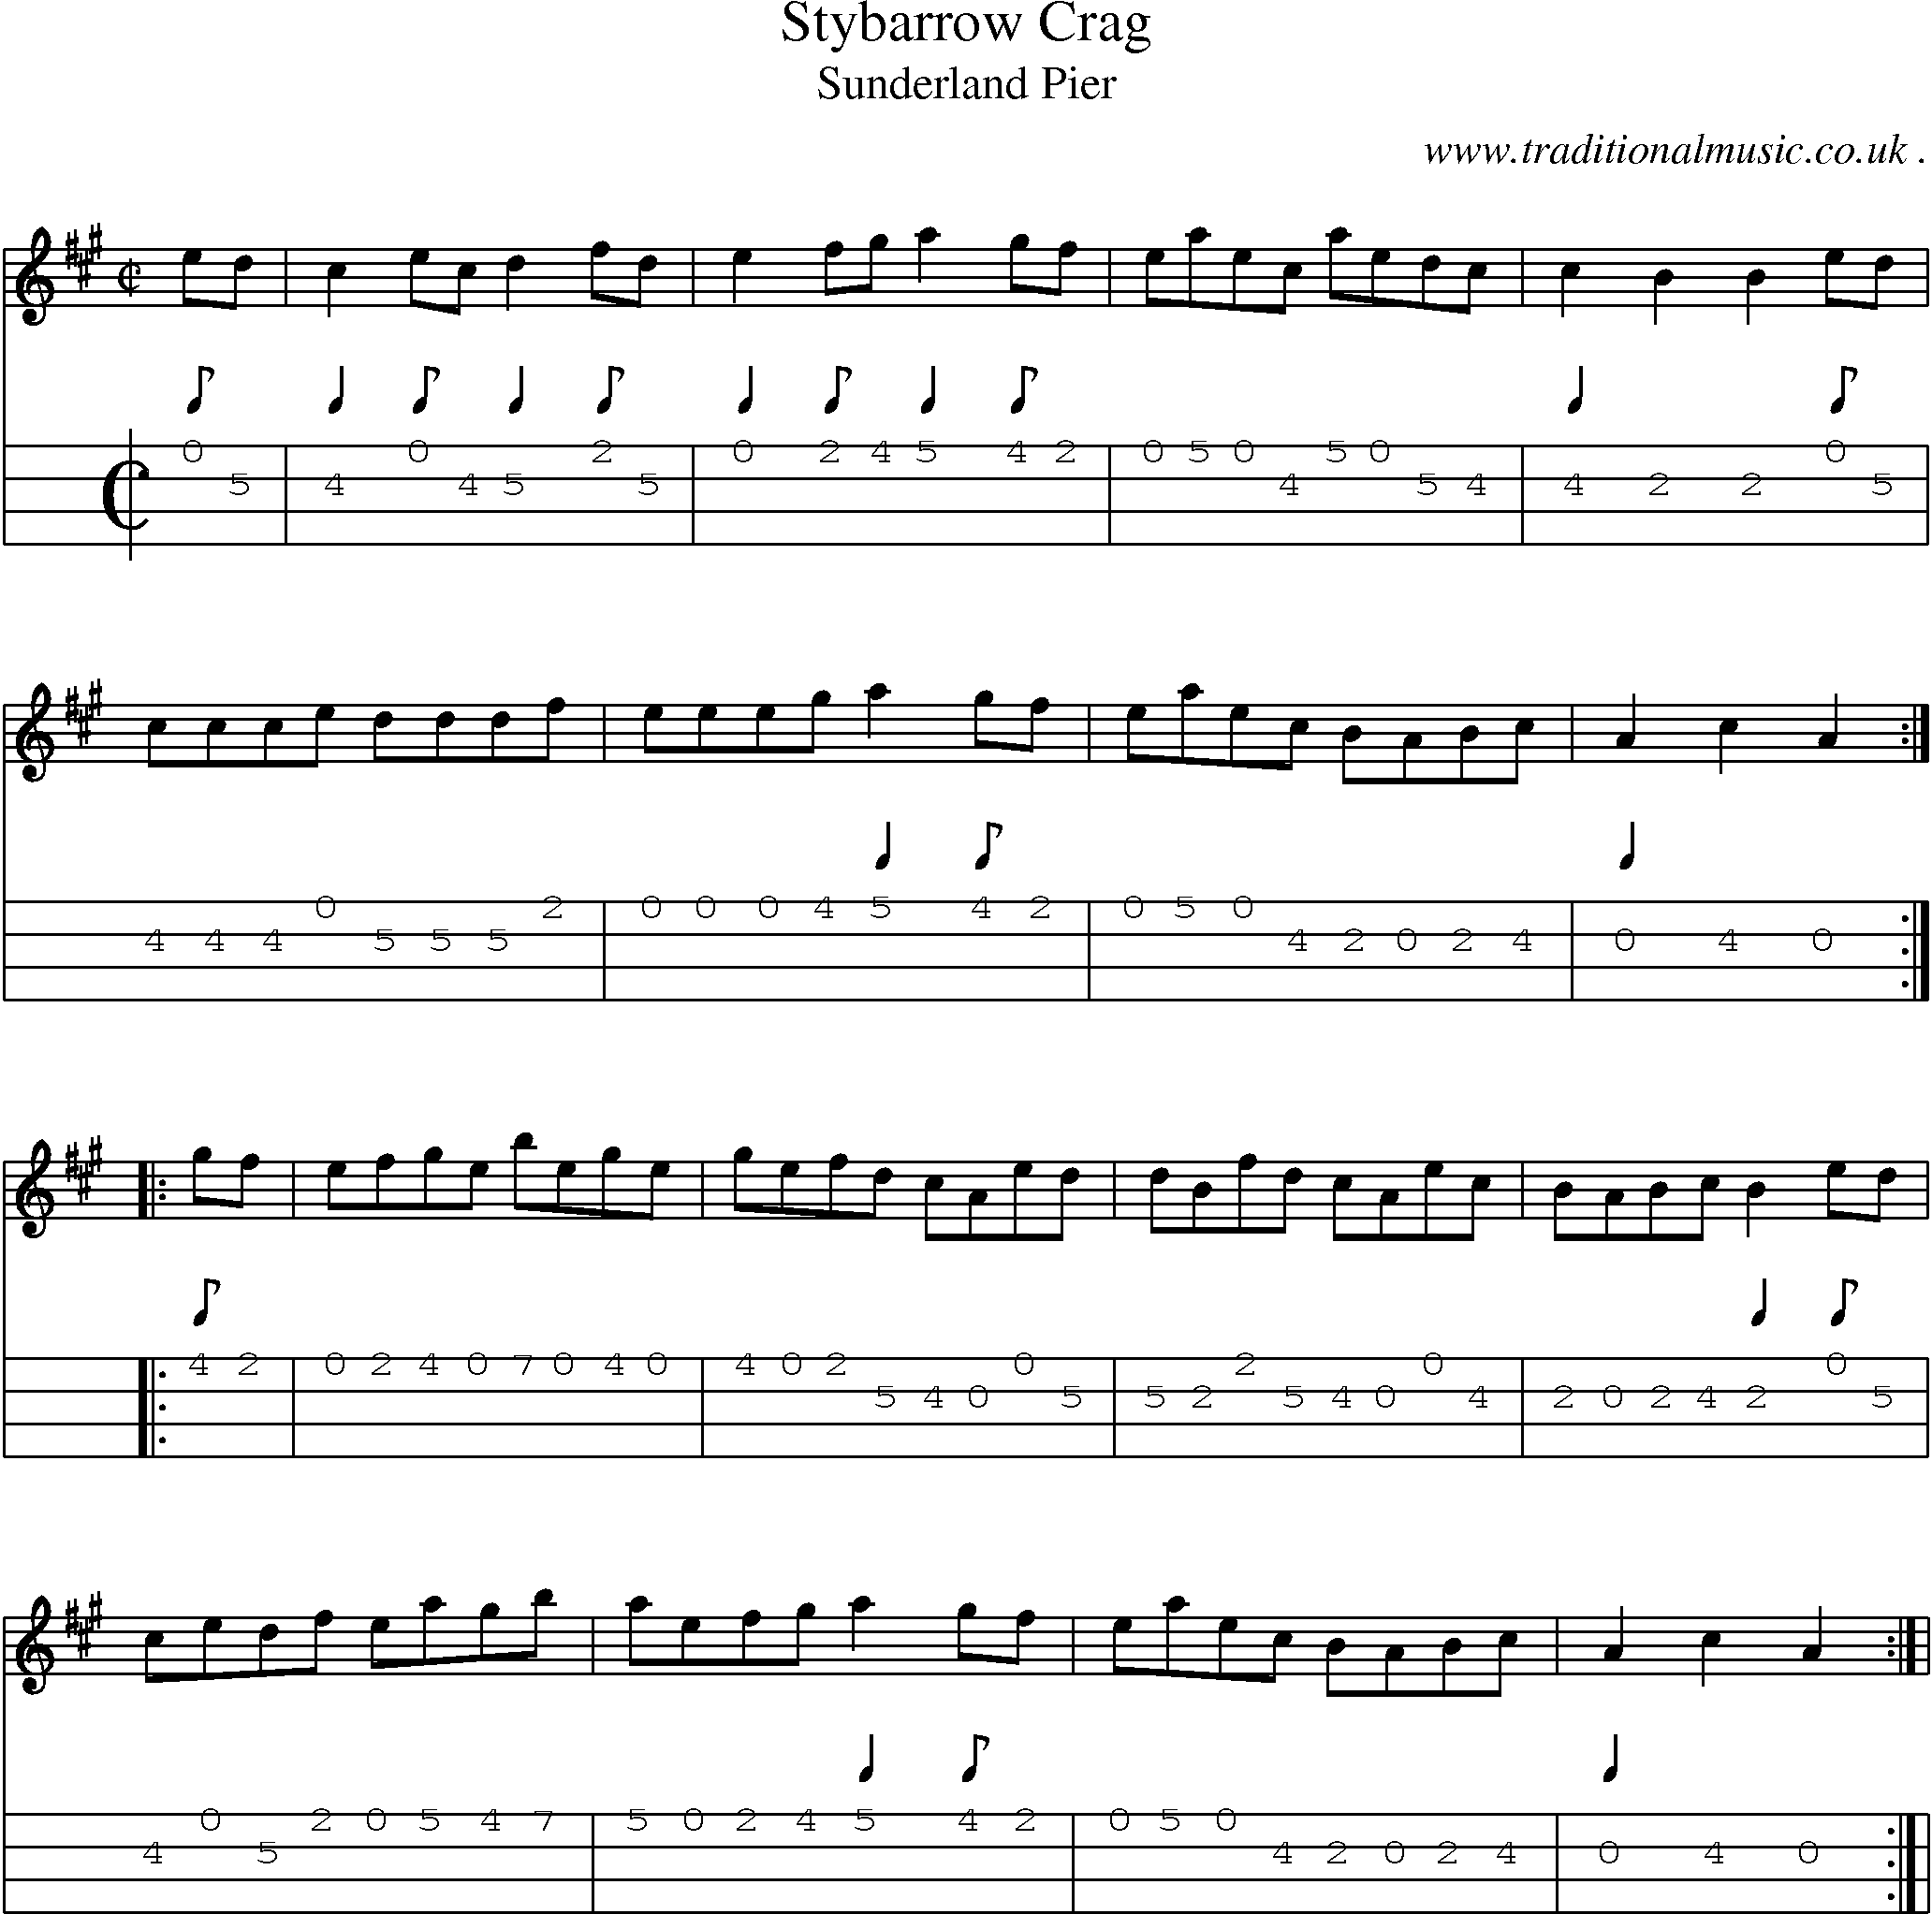 Sheet-Music and Mandolin Tabs for Stybarrow Crag